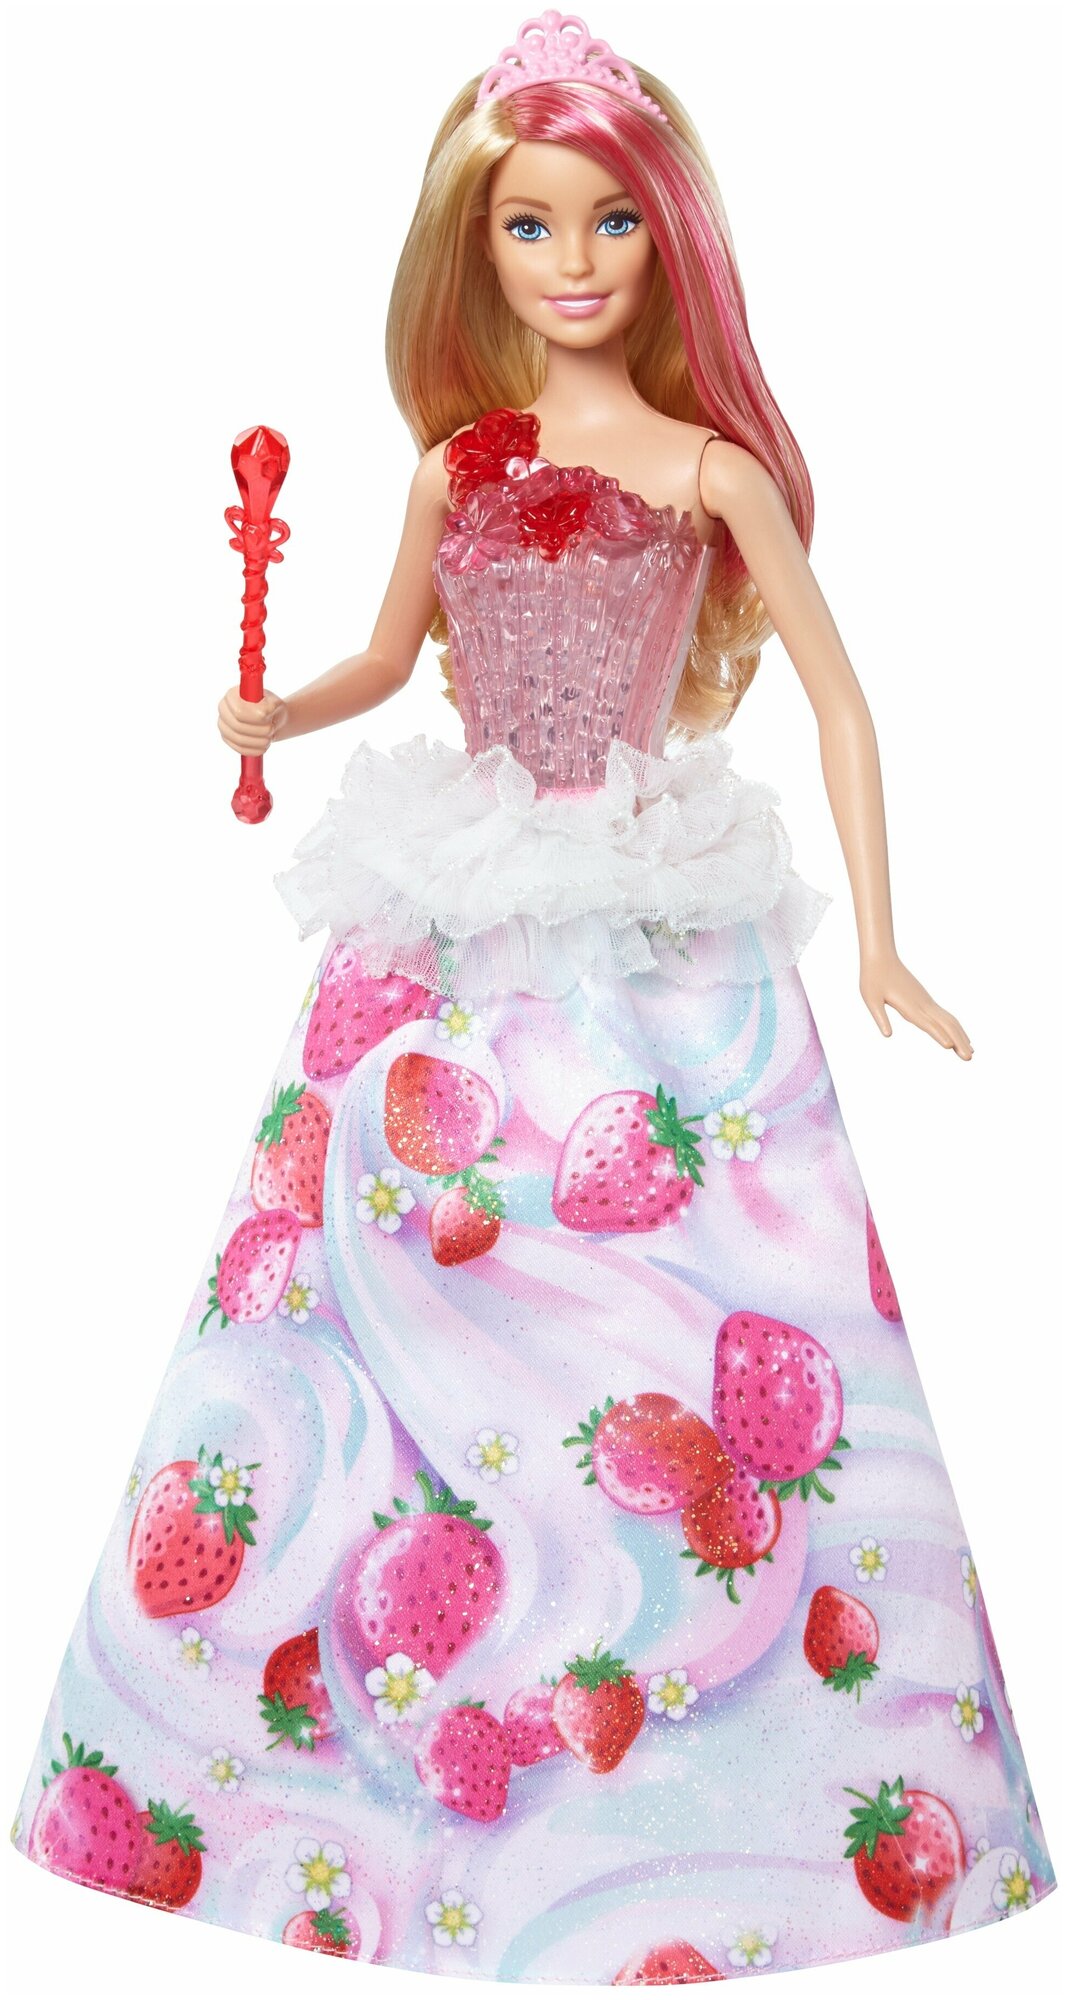 Кукла Barbie Конфетная принцесса, 29 см, DYX28